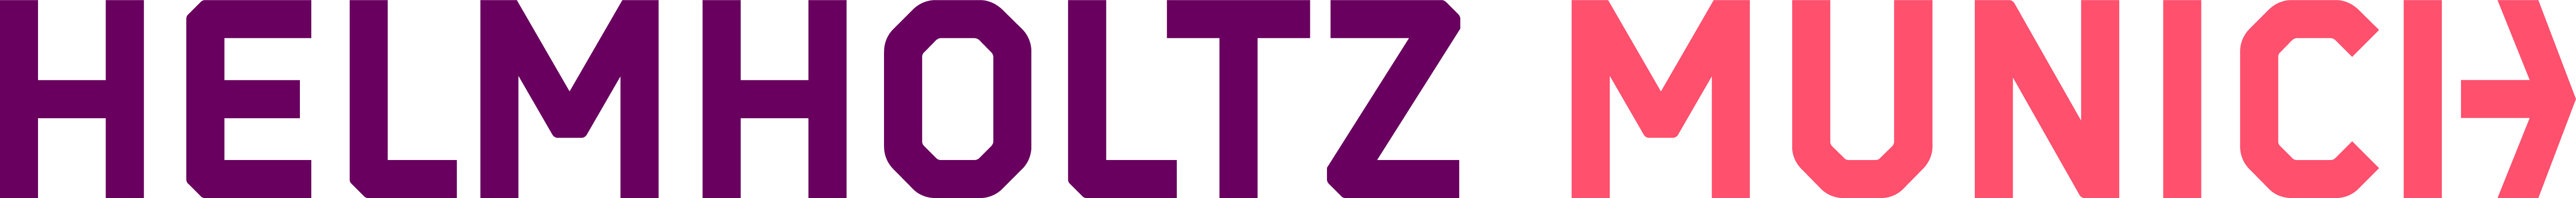 Helmholtz-Munich-Logo-Horizontal-Lockup-Purple-Red-RGB